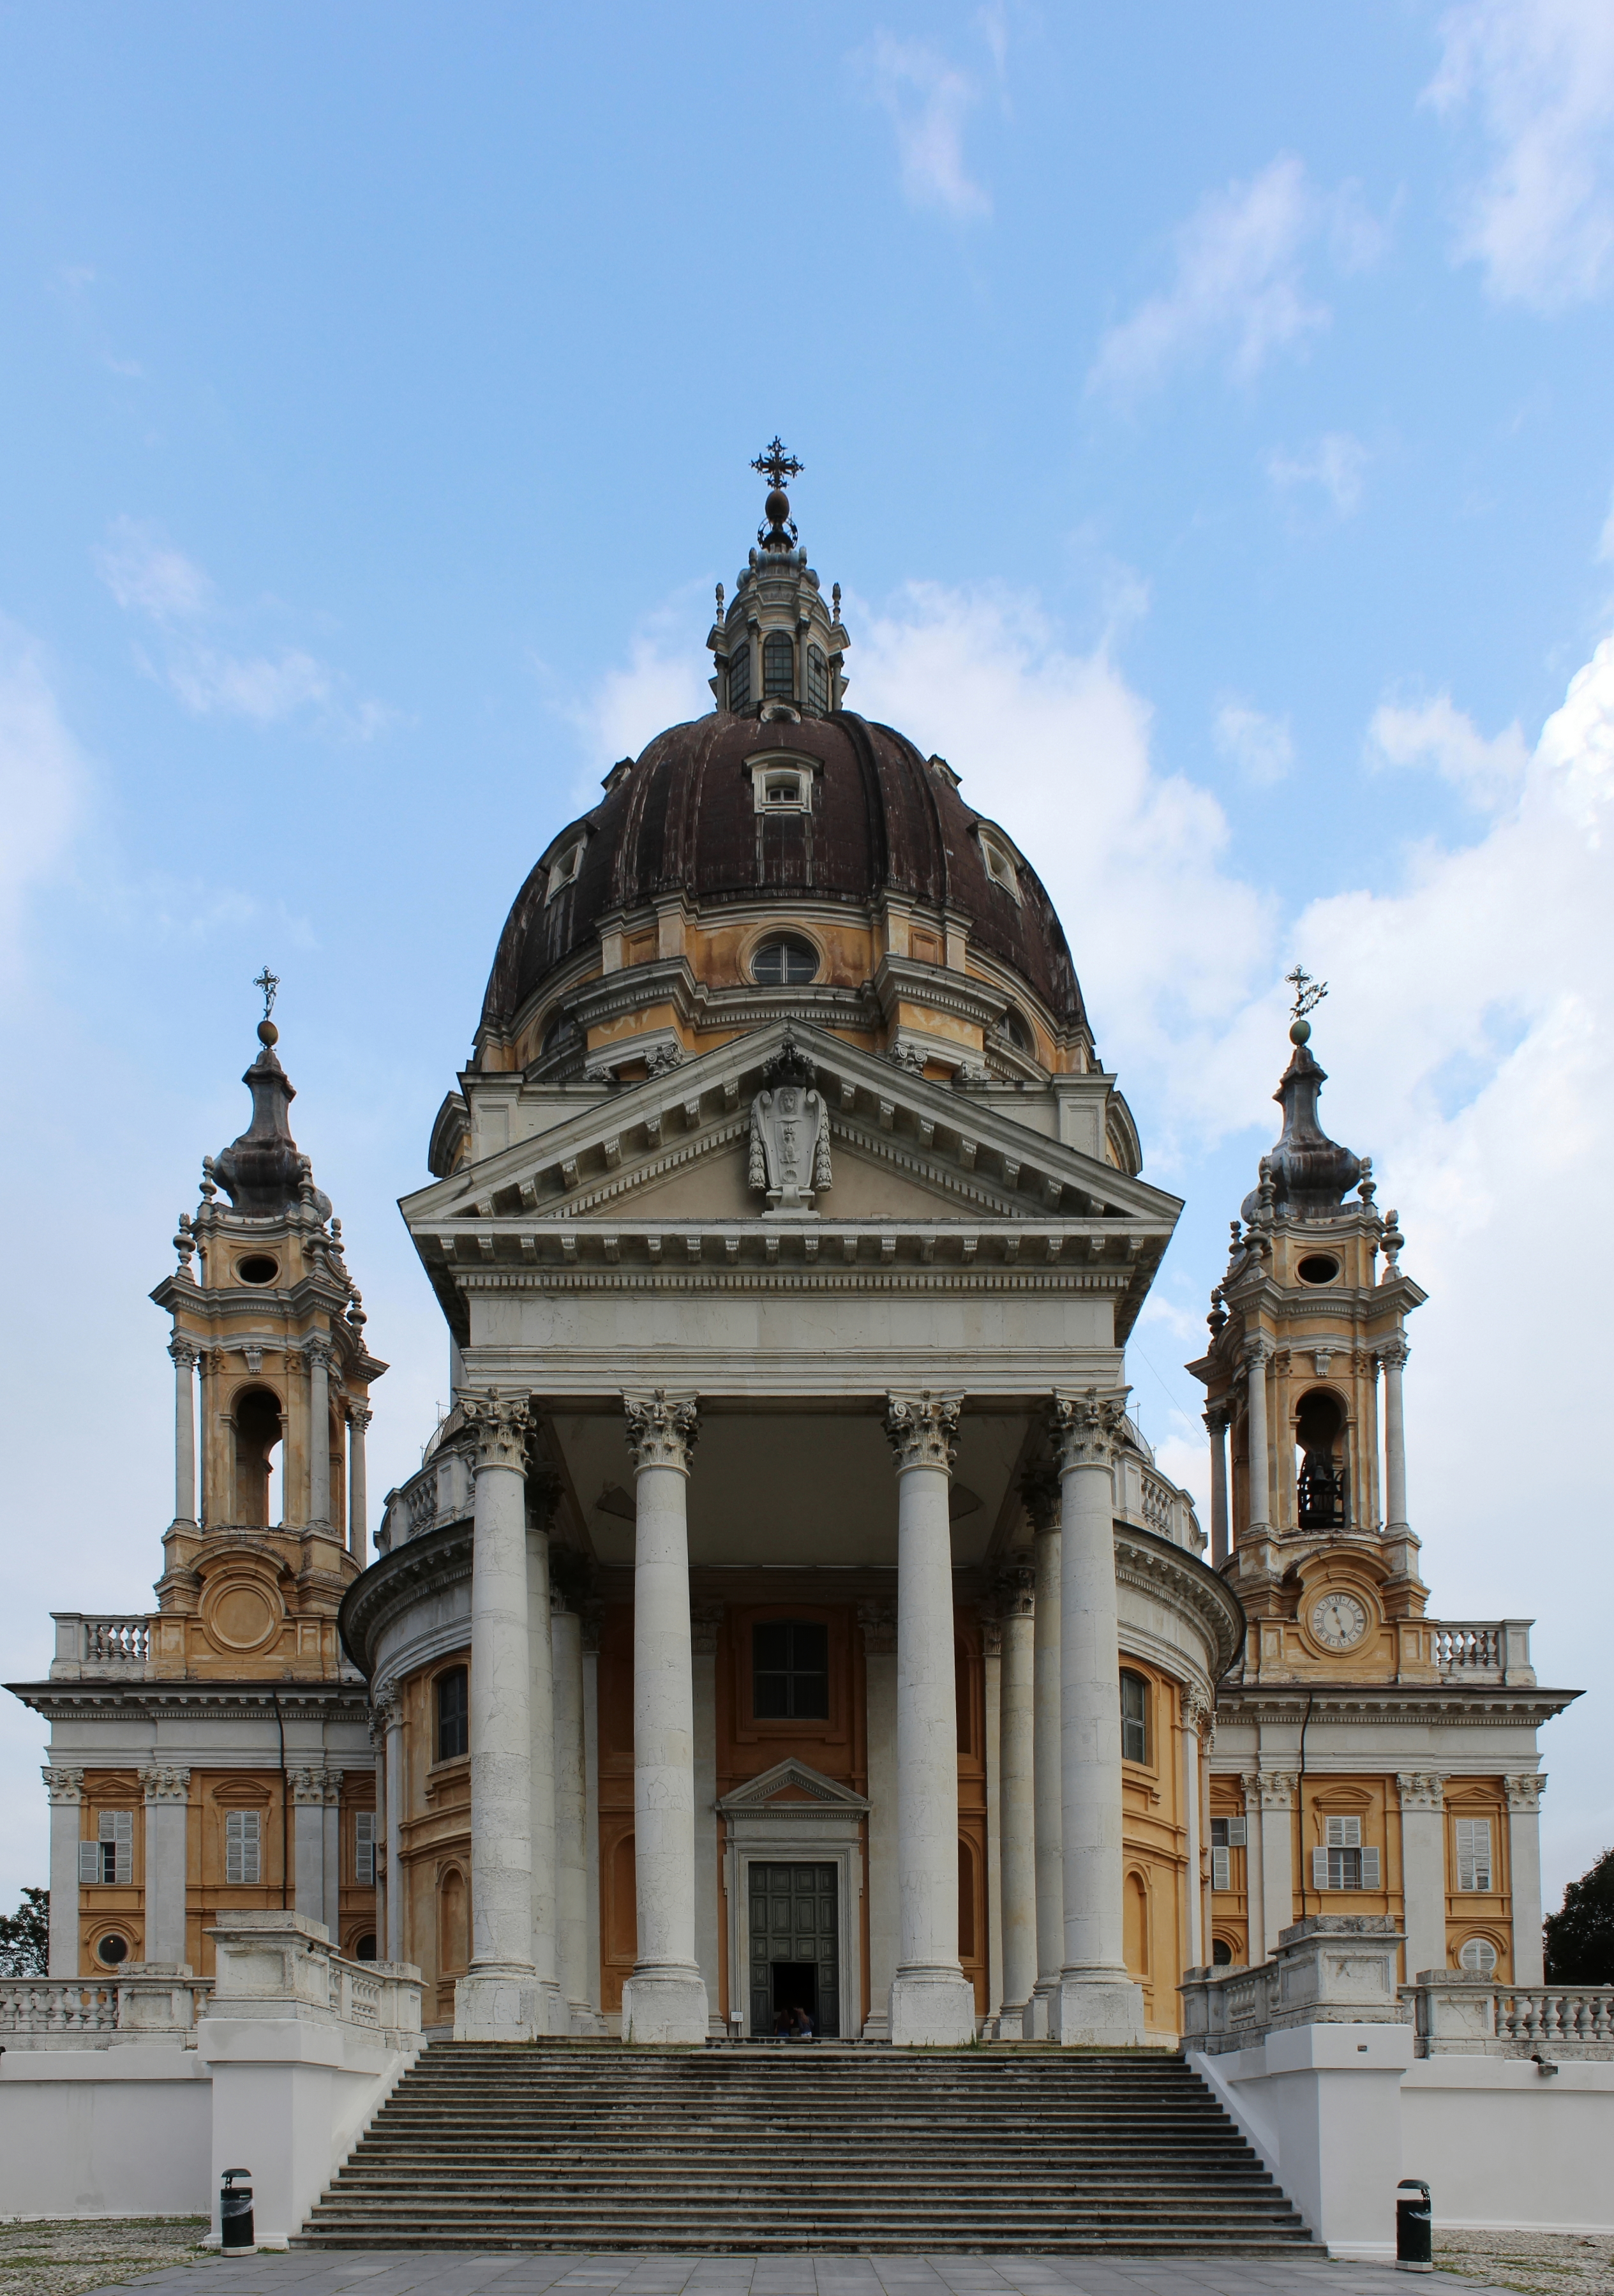 Basilica of Superga - front view